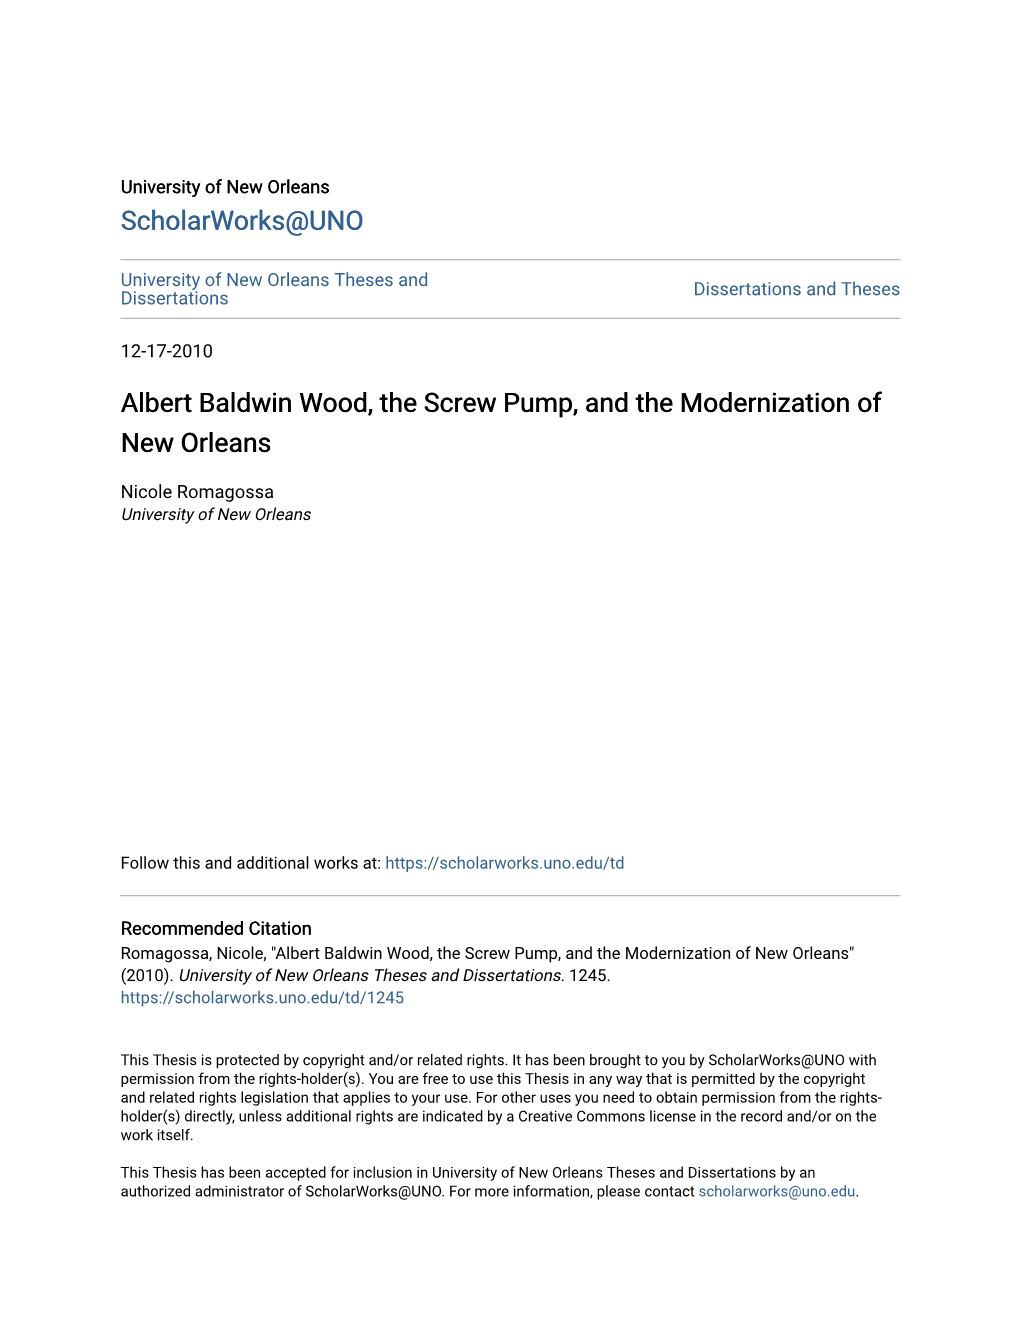 Albert Baldwin Wood, the Screw Pump, and the Modernization of New Orleans